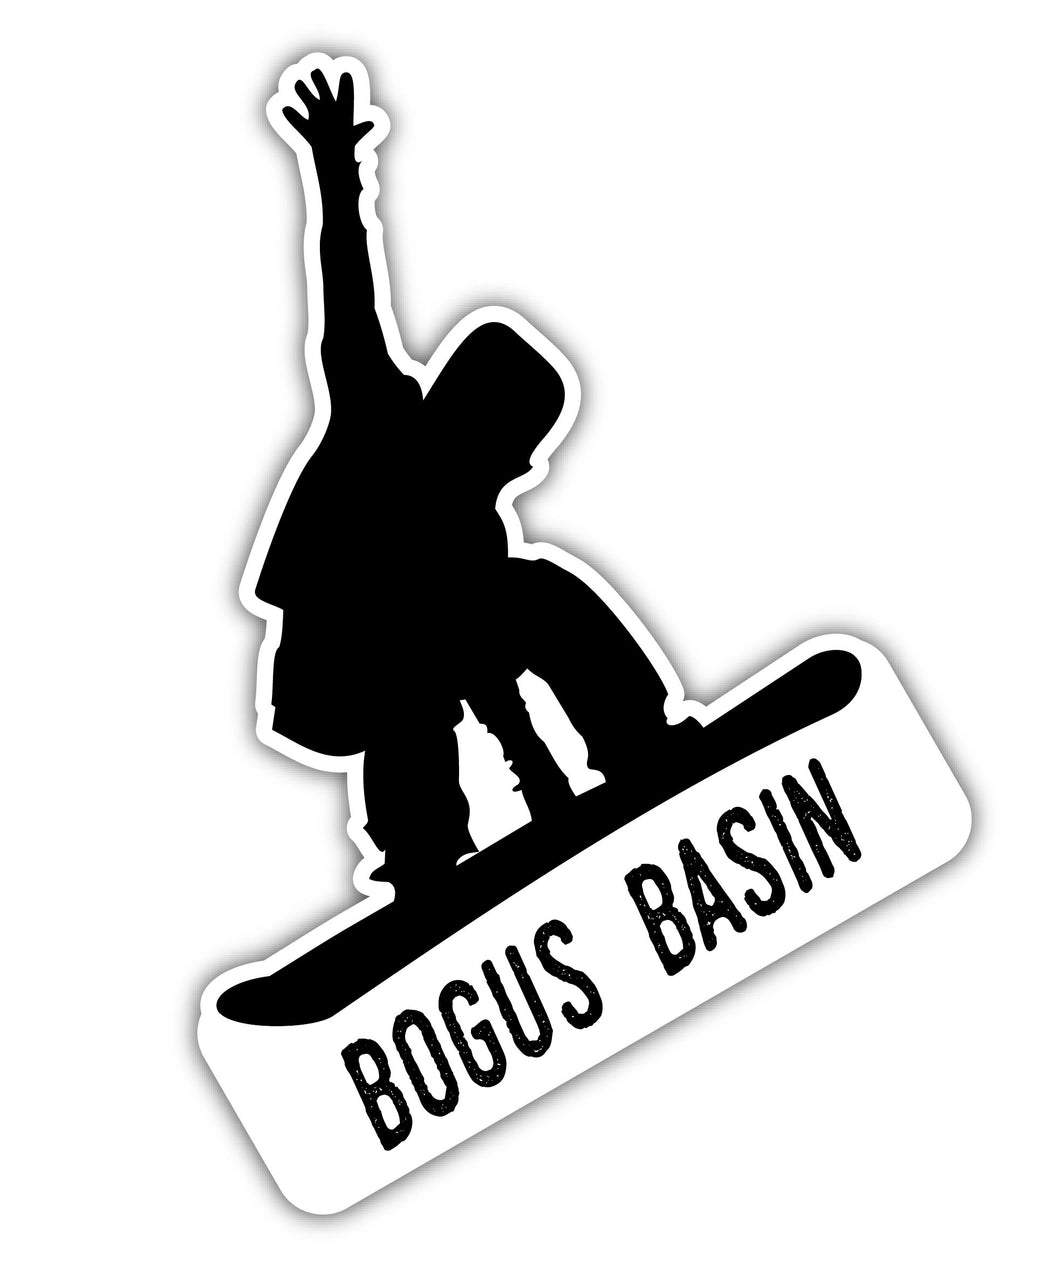 Bogus Basin Idaho Ski Adventures Souvenir Approximately 5 x 2.5-Inch Vinyl Decal Sticker Goggle Design